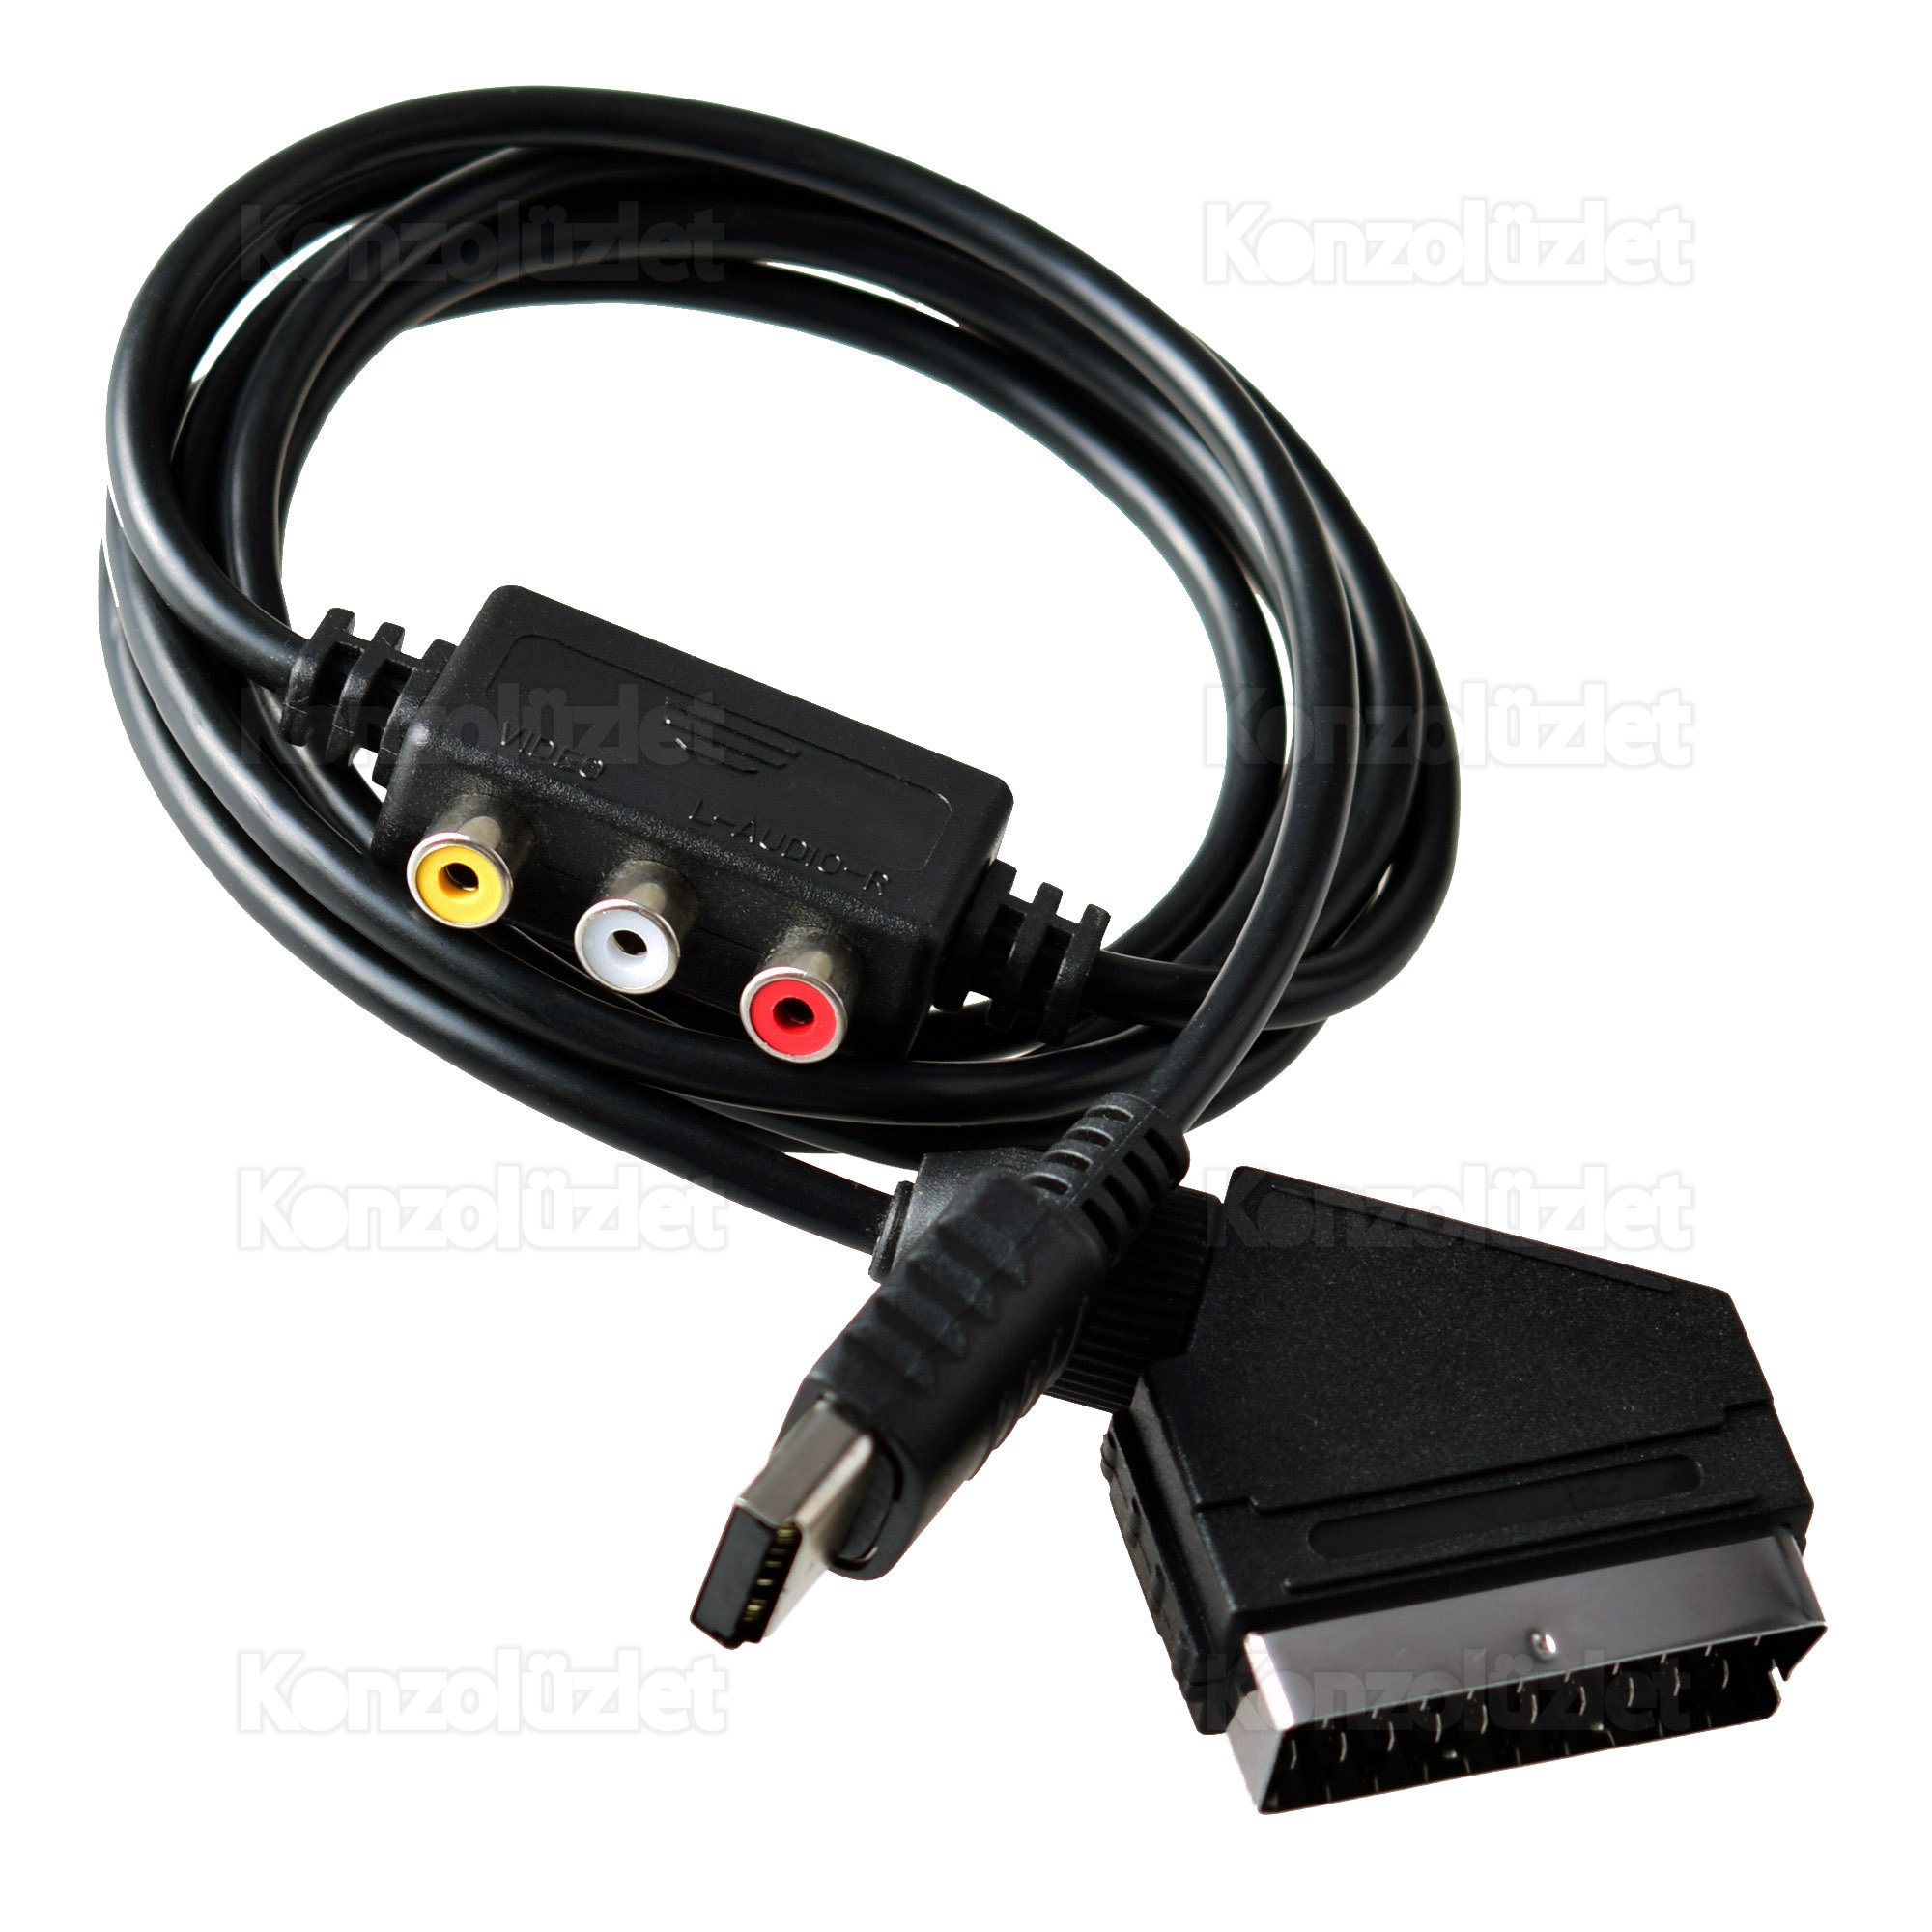 Av каналы. RGB SCART кабель на Sega. Адаптер av1 (SCART). Sega Dreamcast SCART RGB. RGB кабель Sega Dreamcast.